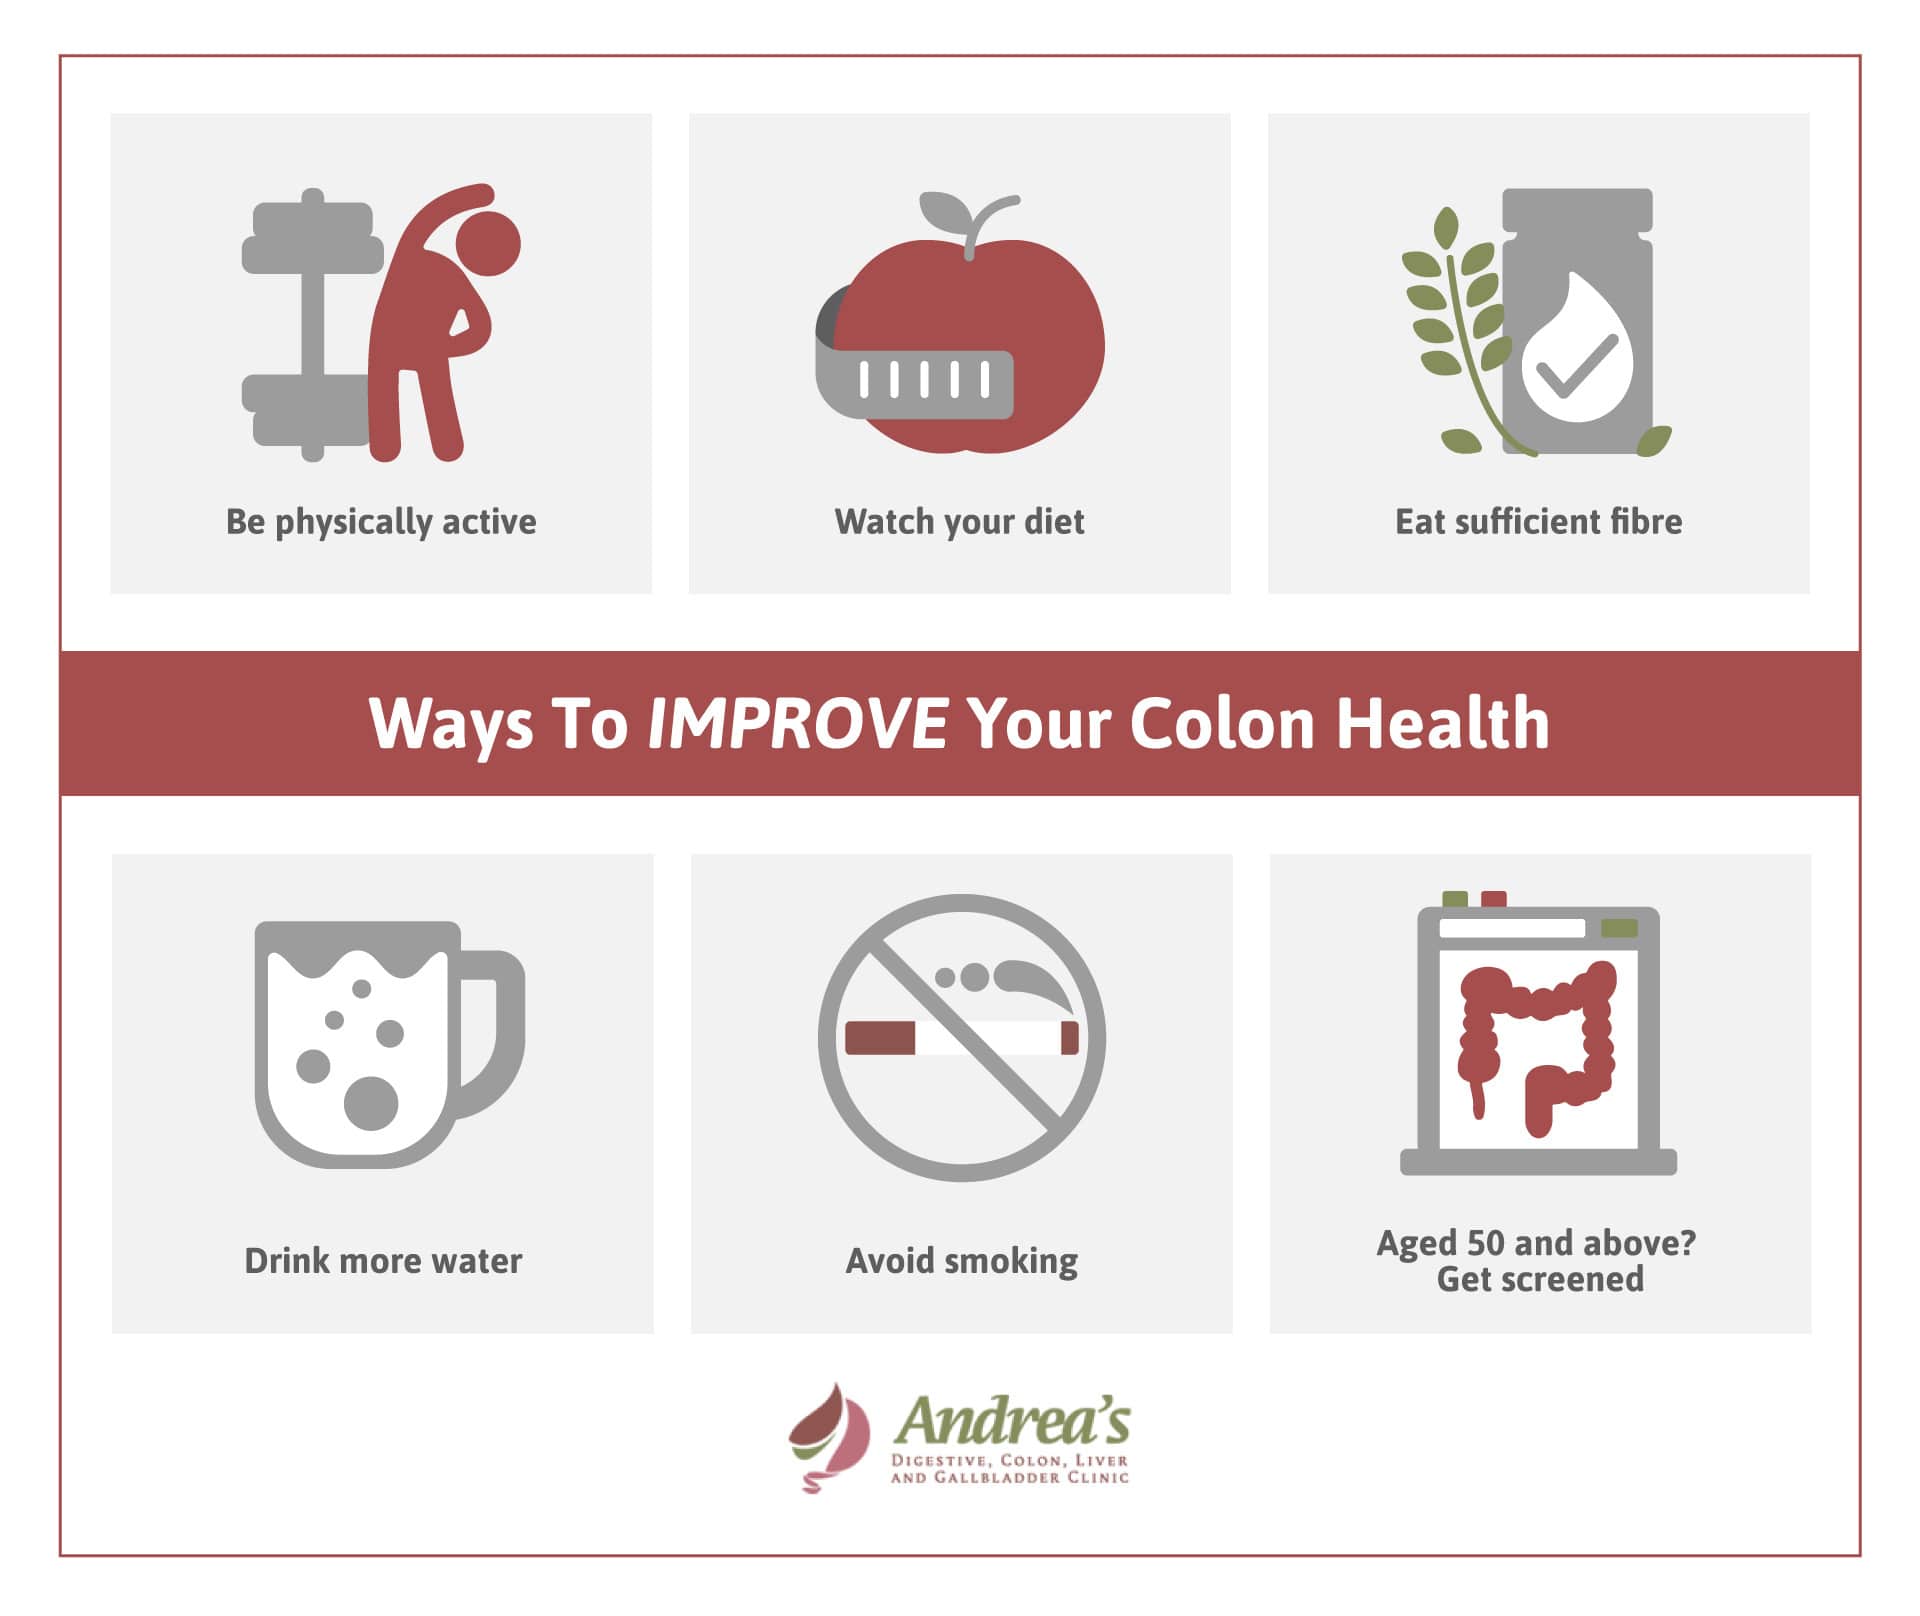 Ways to improve your colon health